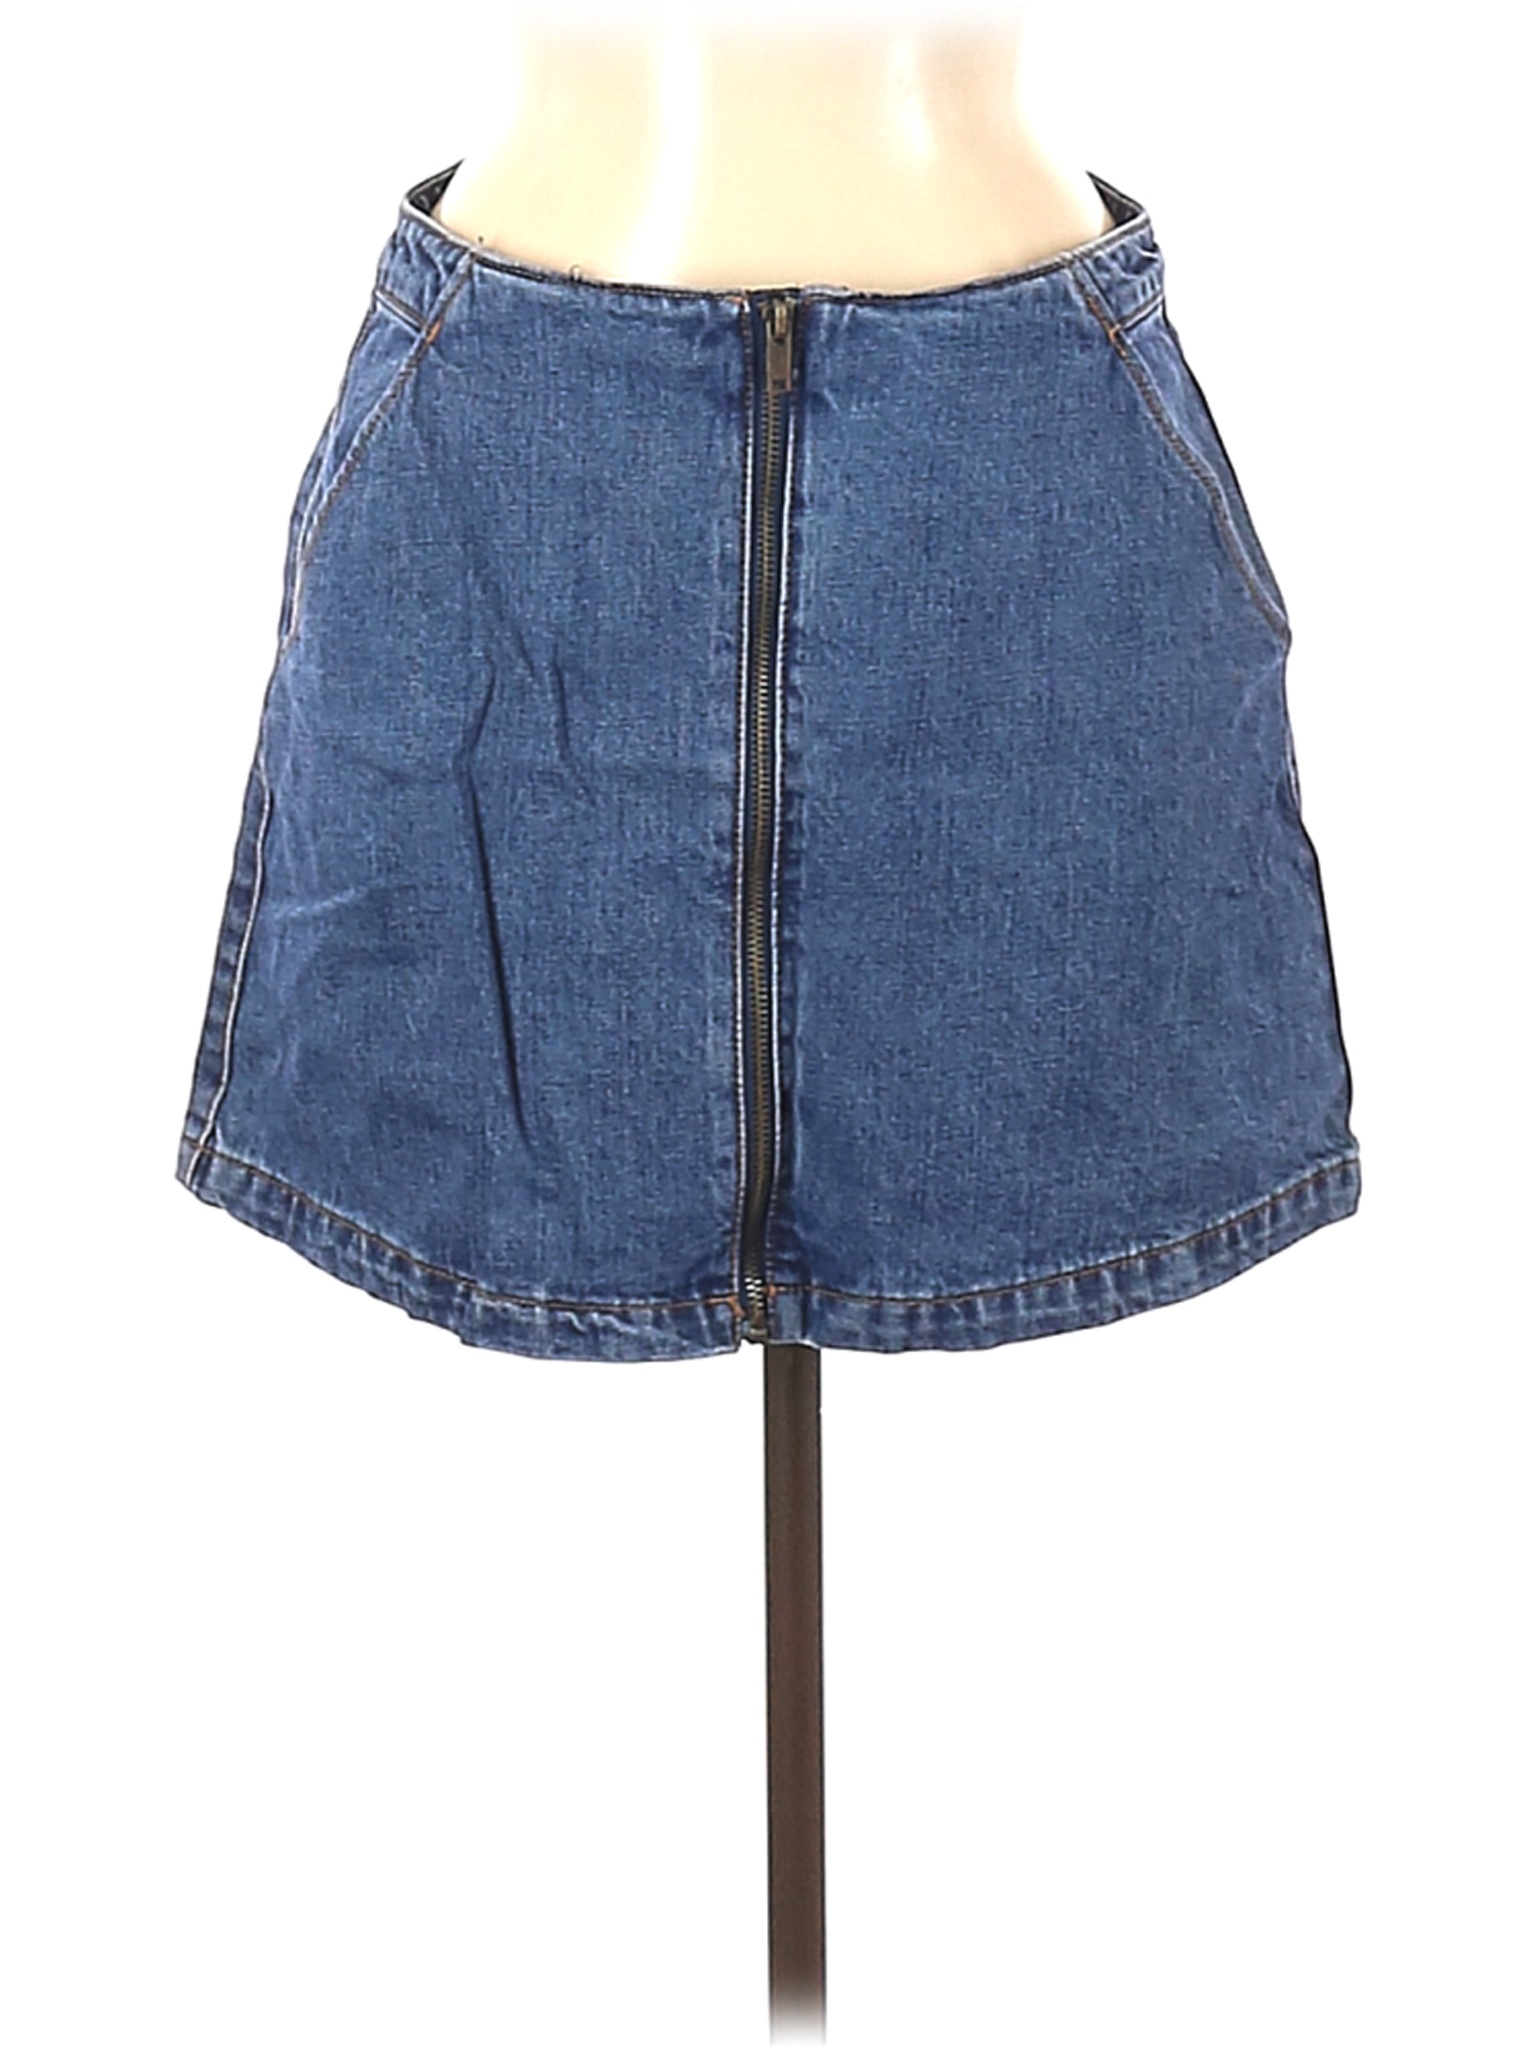 Trafaluc by Zara 100% Cotton Solid Blue Denim Skirt Size M - 82% off ...